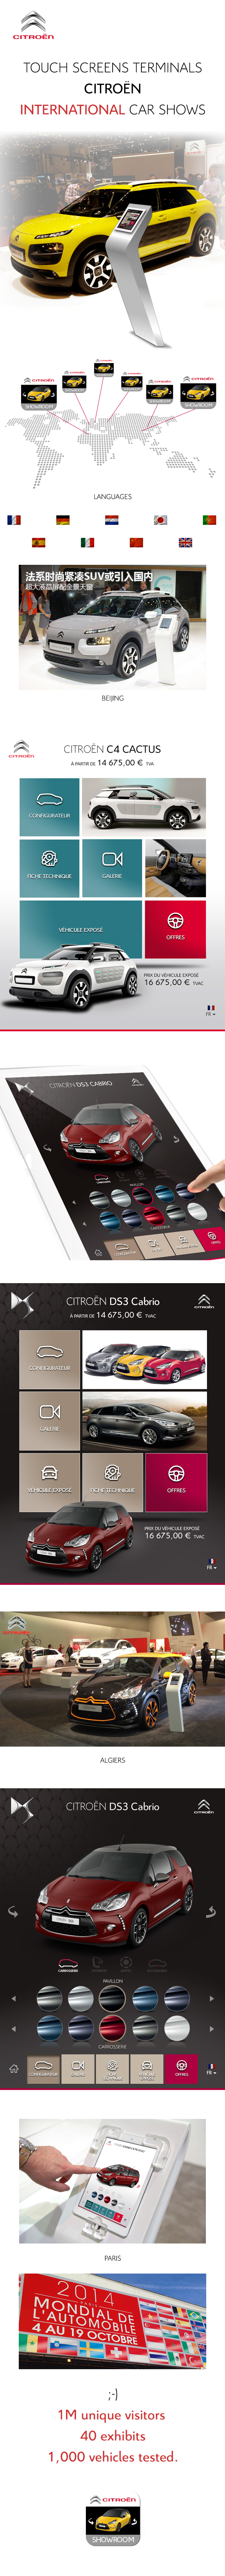 Automotive Interactive design ux/ui International Automotive Shows iPad touch screen Interactive Branding